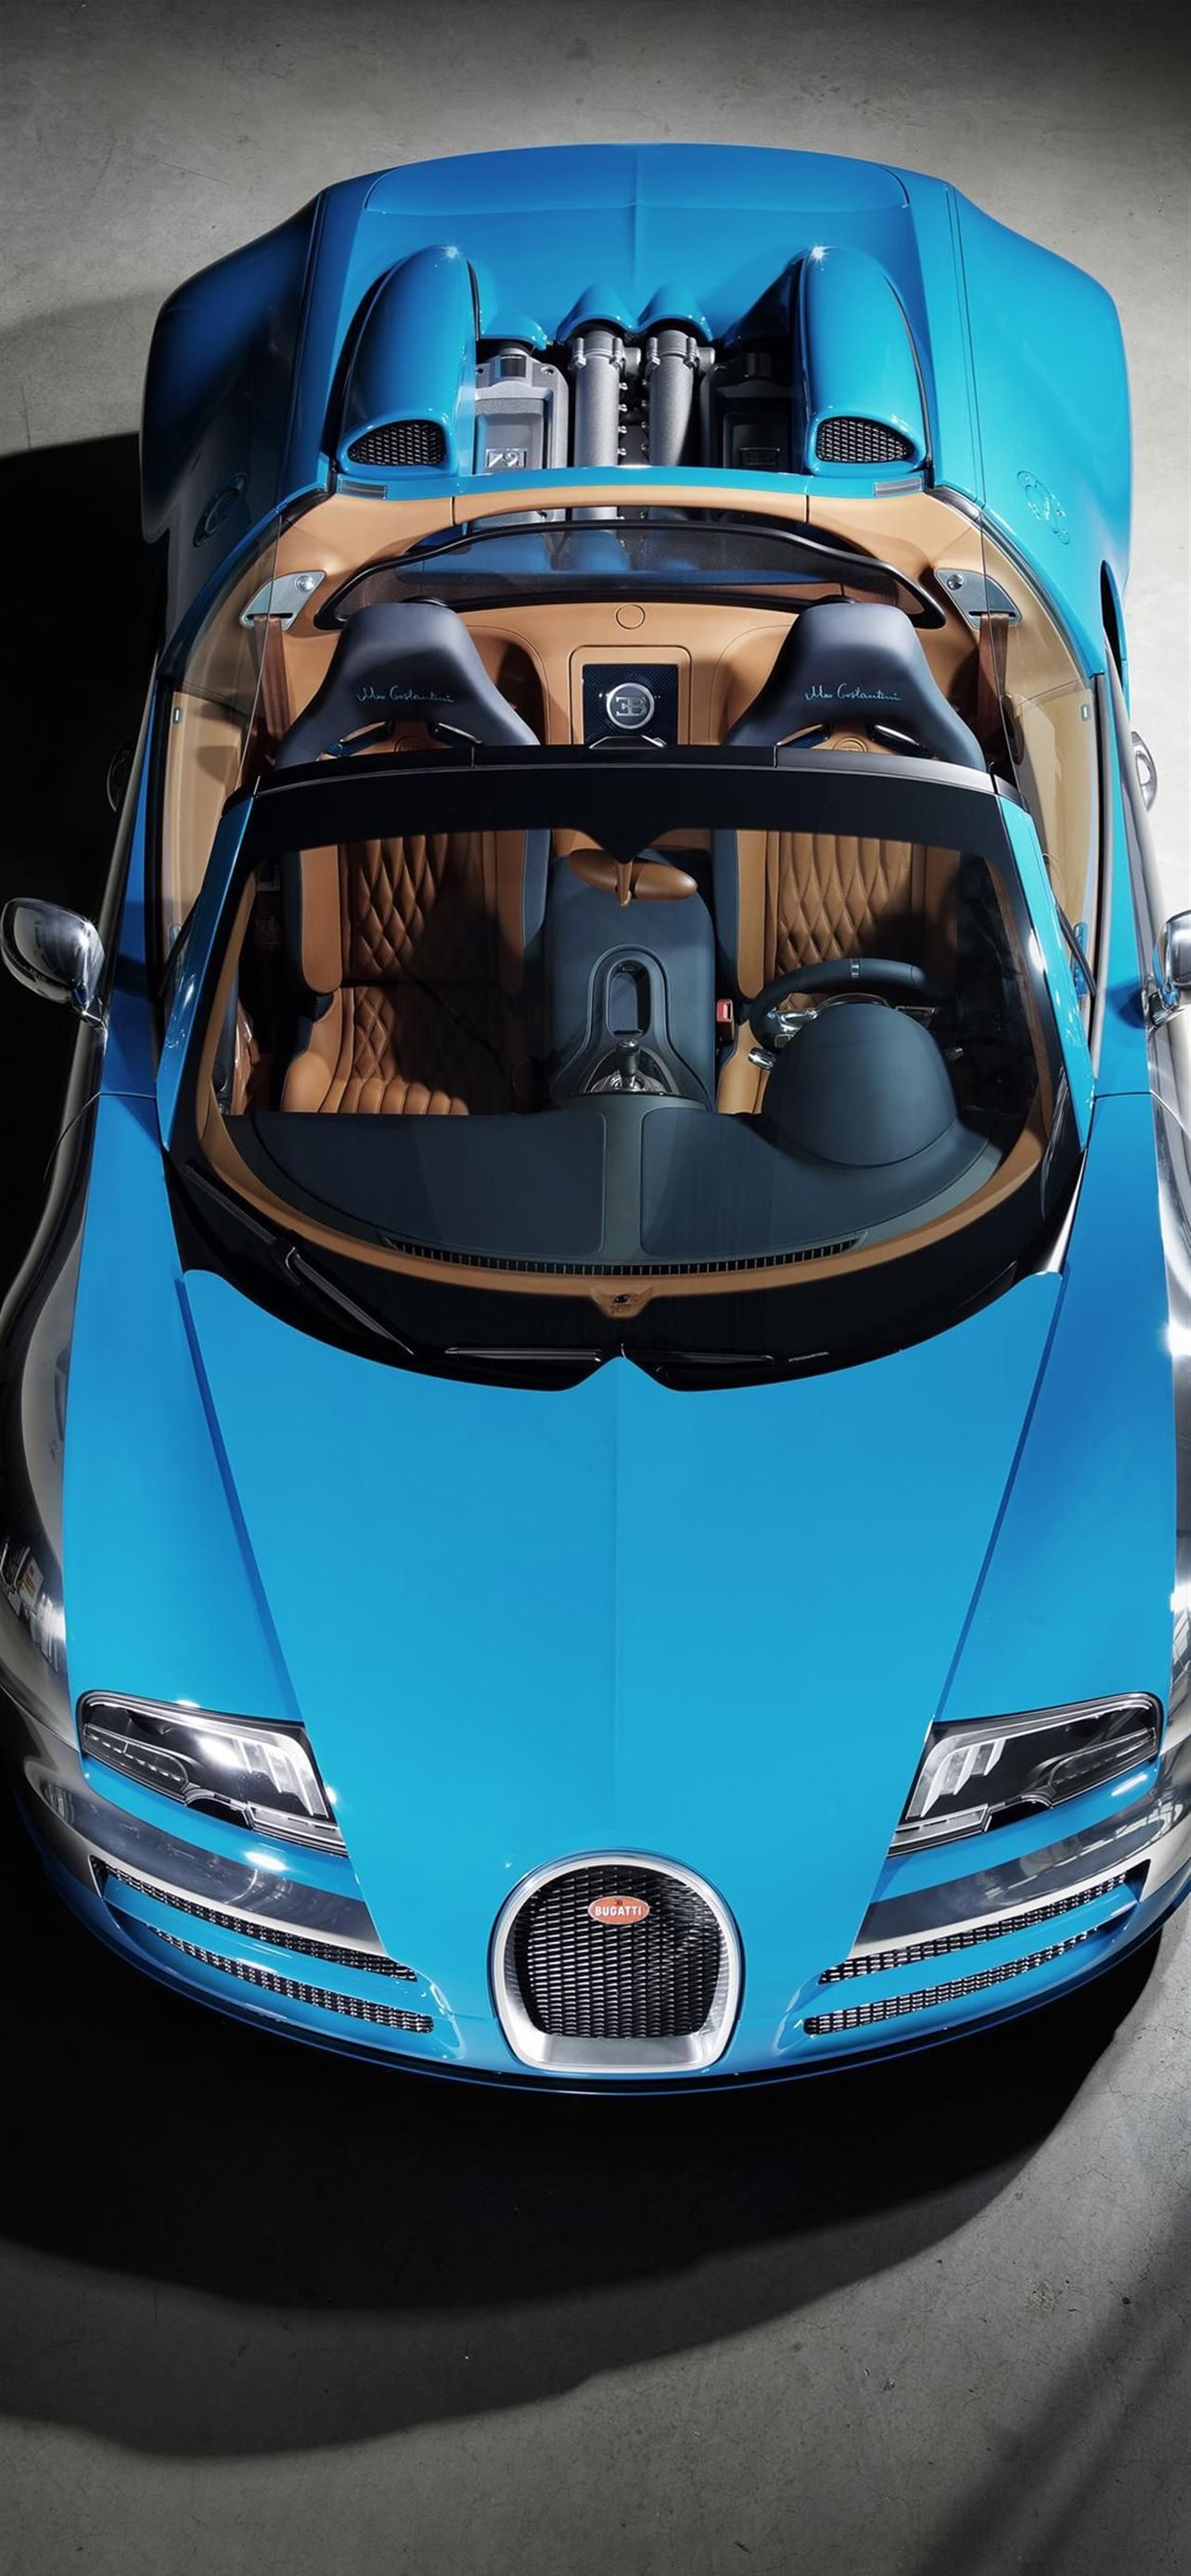 bugatti veyron eb 164 iPhone Wallpapers Free Download